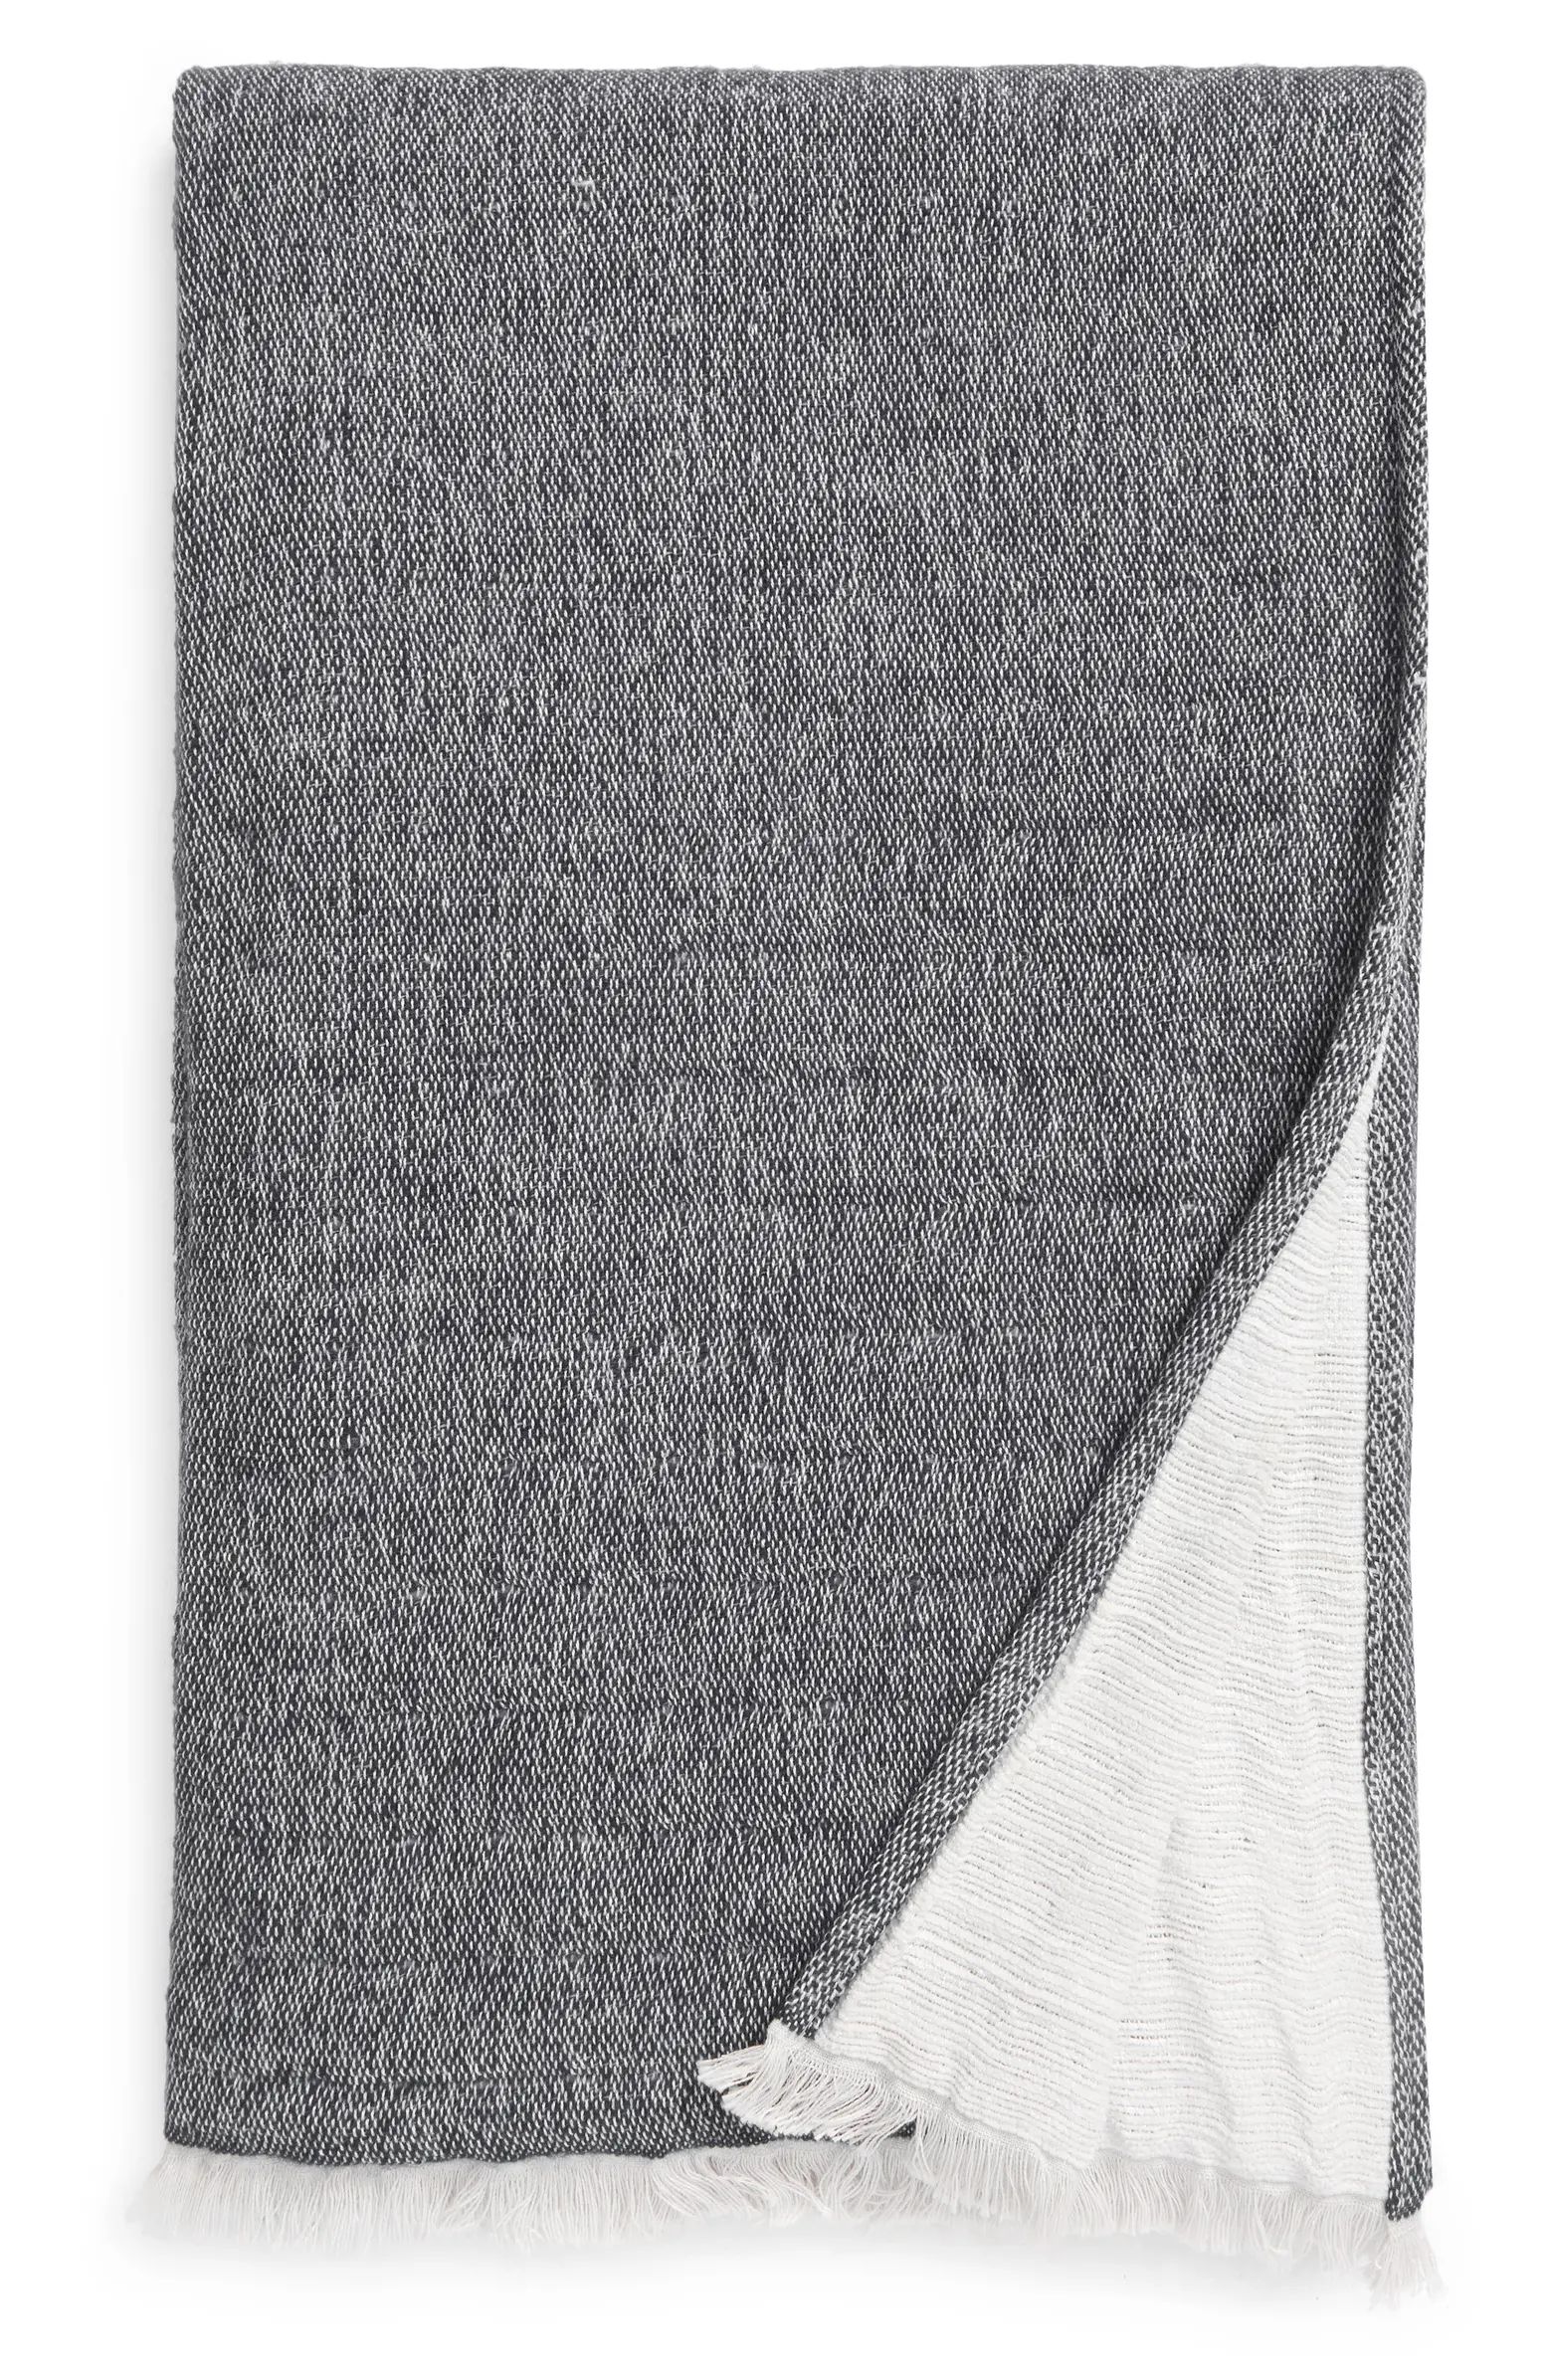 Reversible Texture Weave Throw Blanket | Nordstrom